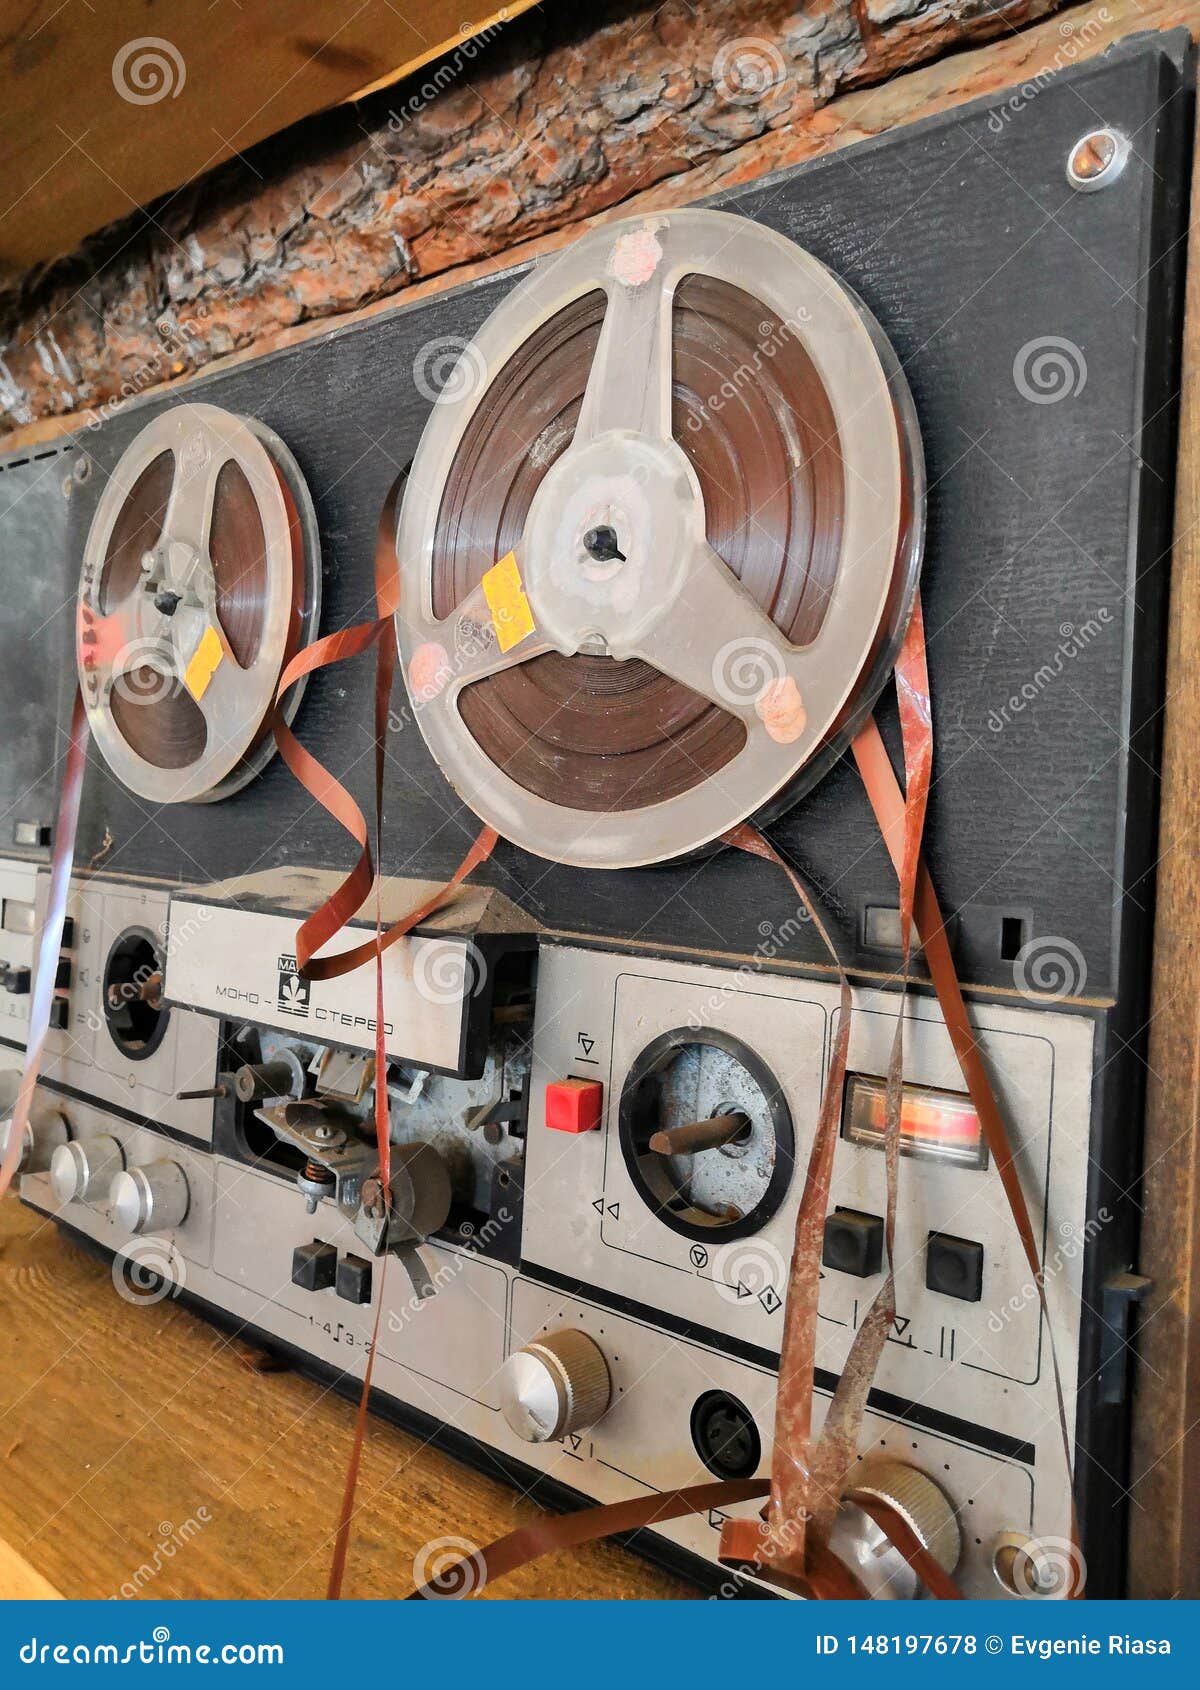 Old Broken Reel. Old Music Center Studio Tape Recorder. the Tape